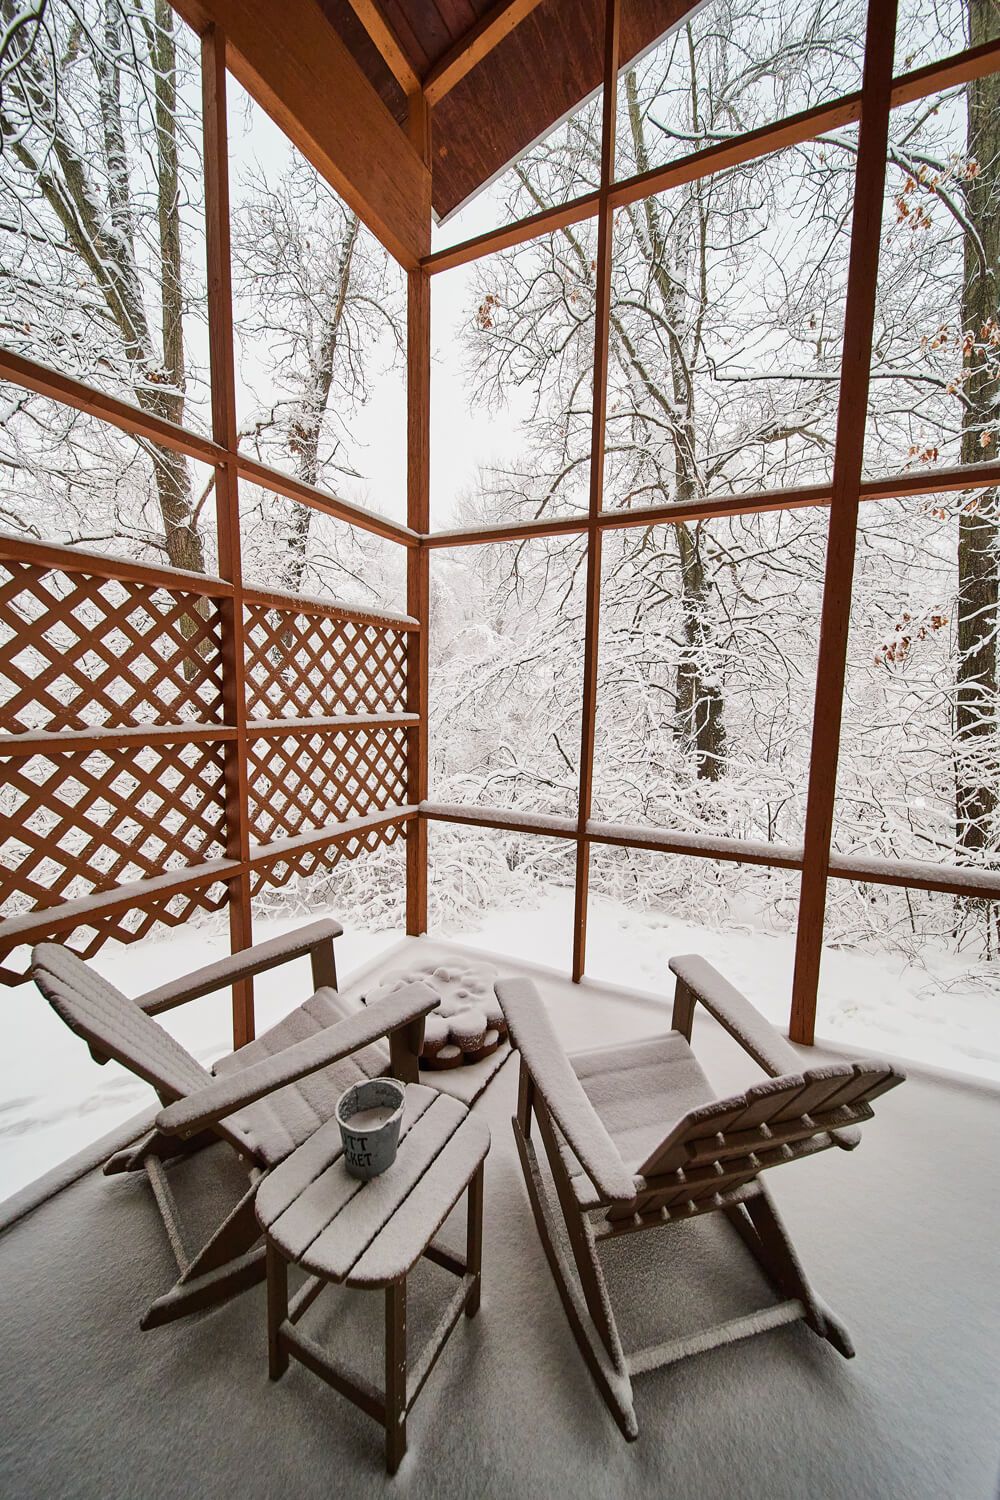 Snowy three season porch